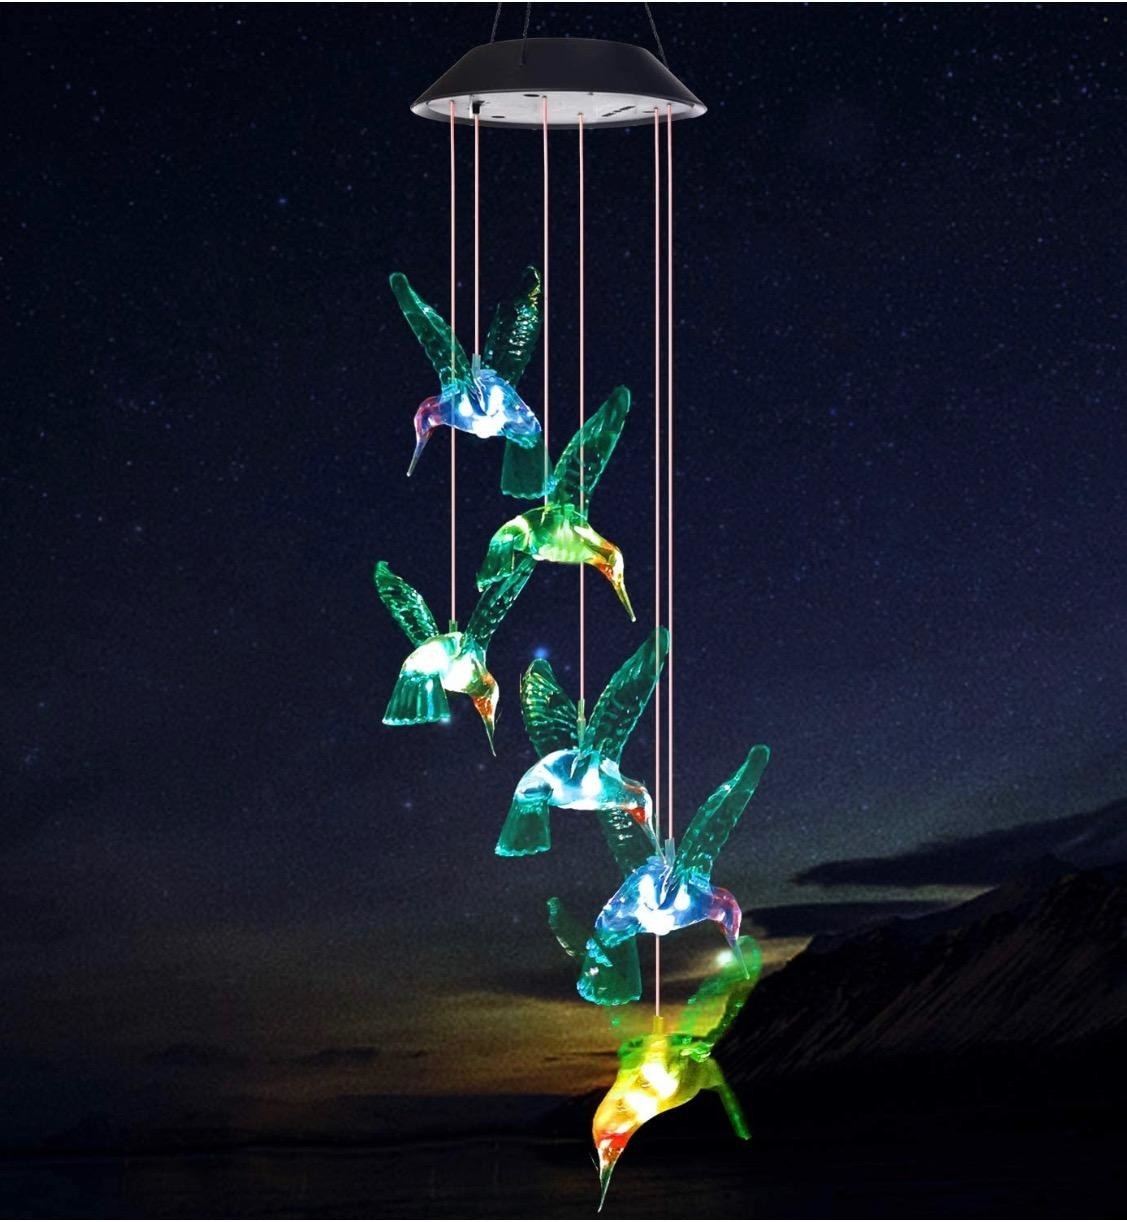 The hummingbird wind chimes against a dark night sky